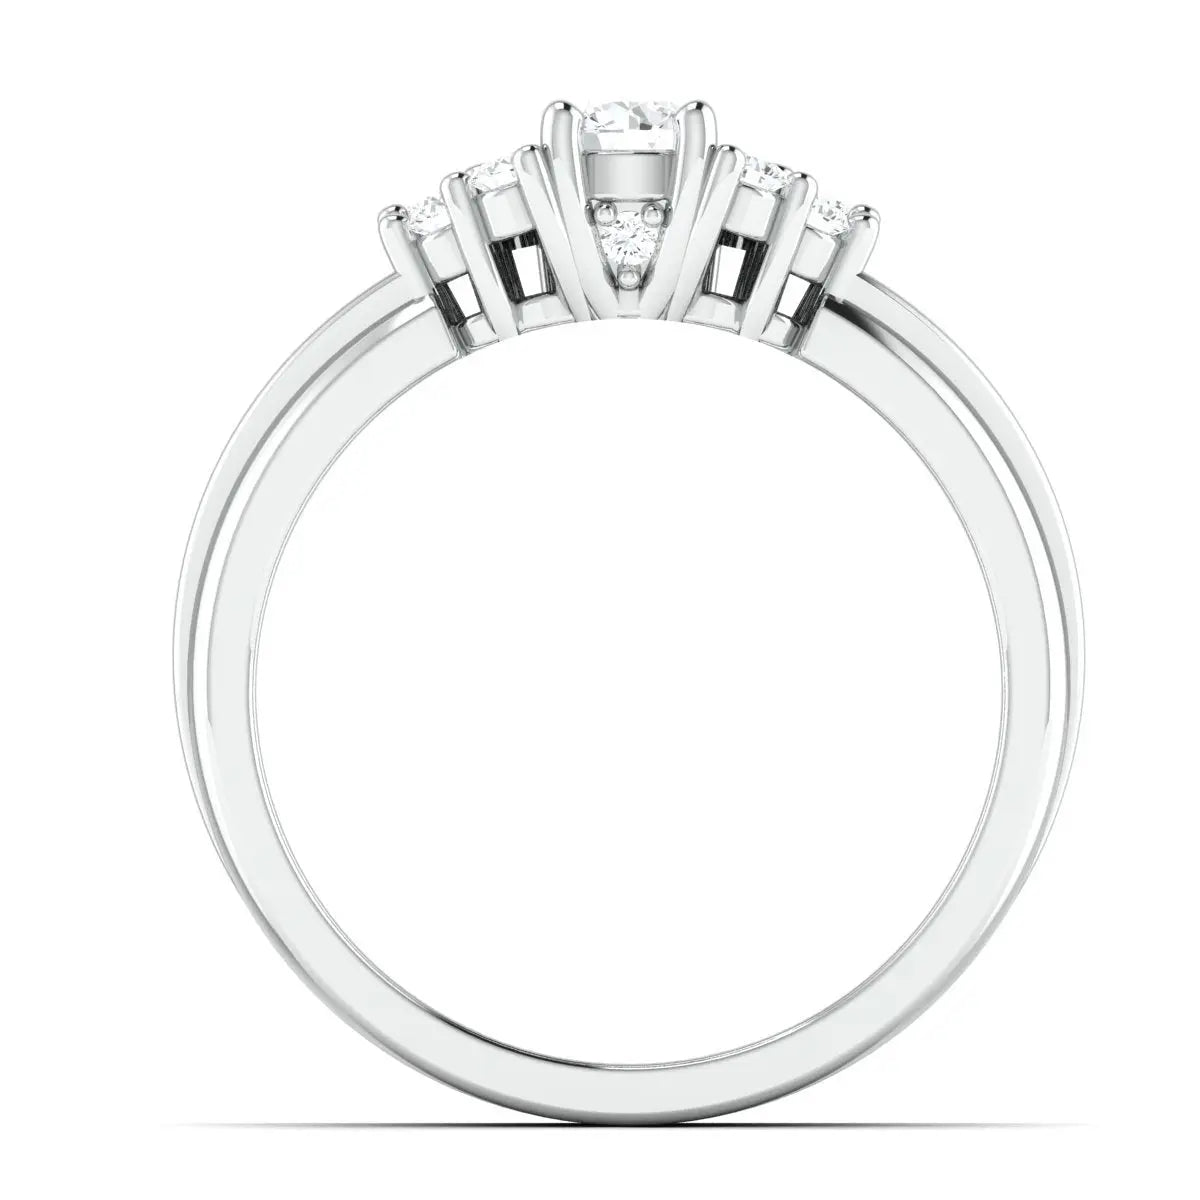 Spark of Love - Platinum Couple Rings with Diamonds JL PT 600   Jewelove.US